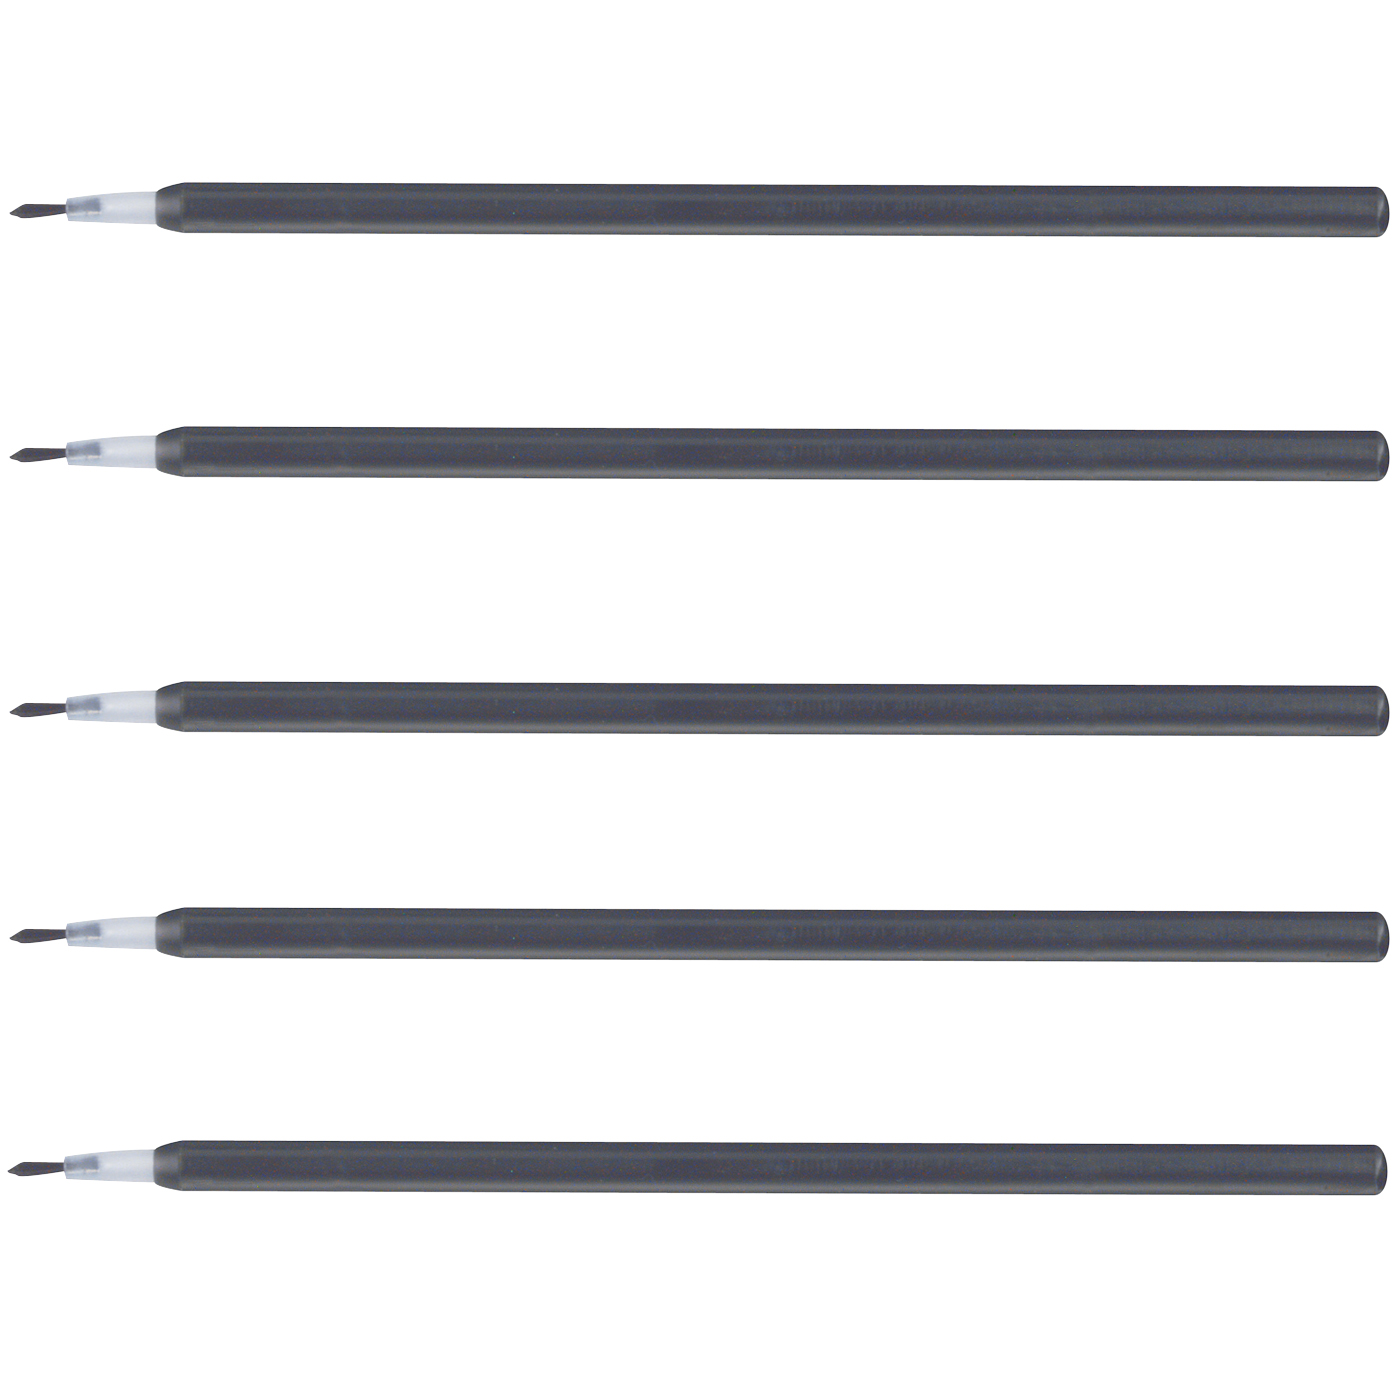 FINOHIT Brush Holders, Black - 5 pieces